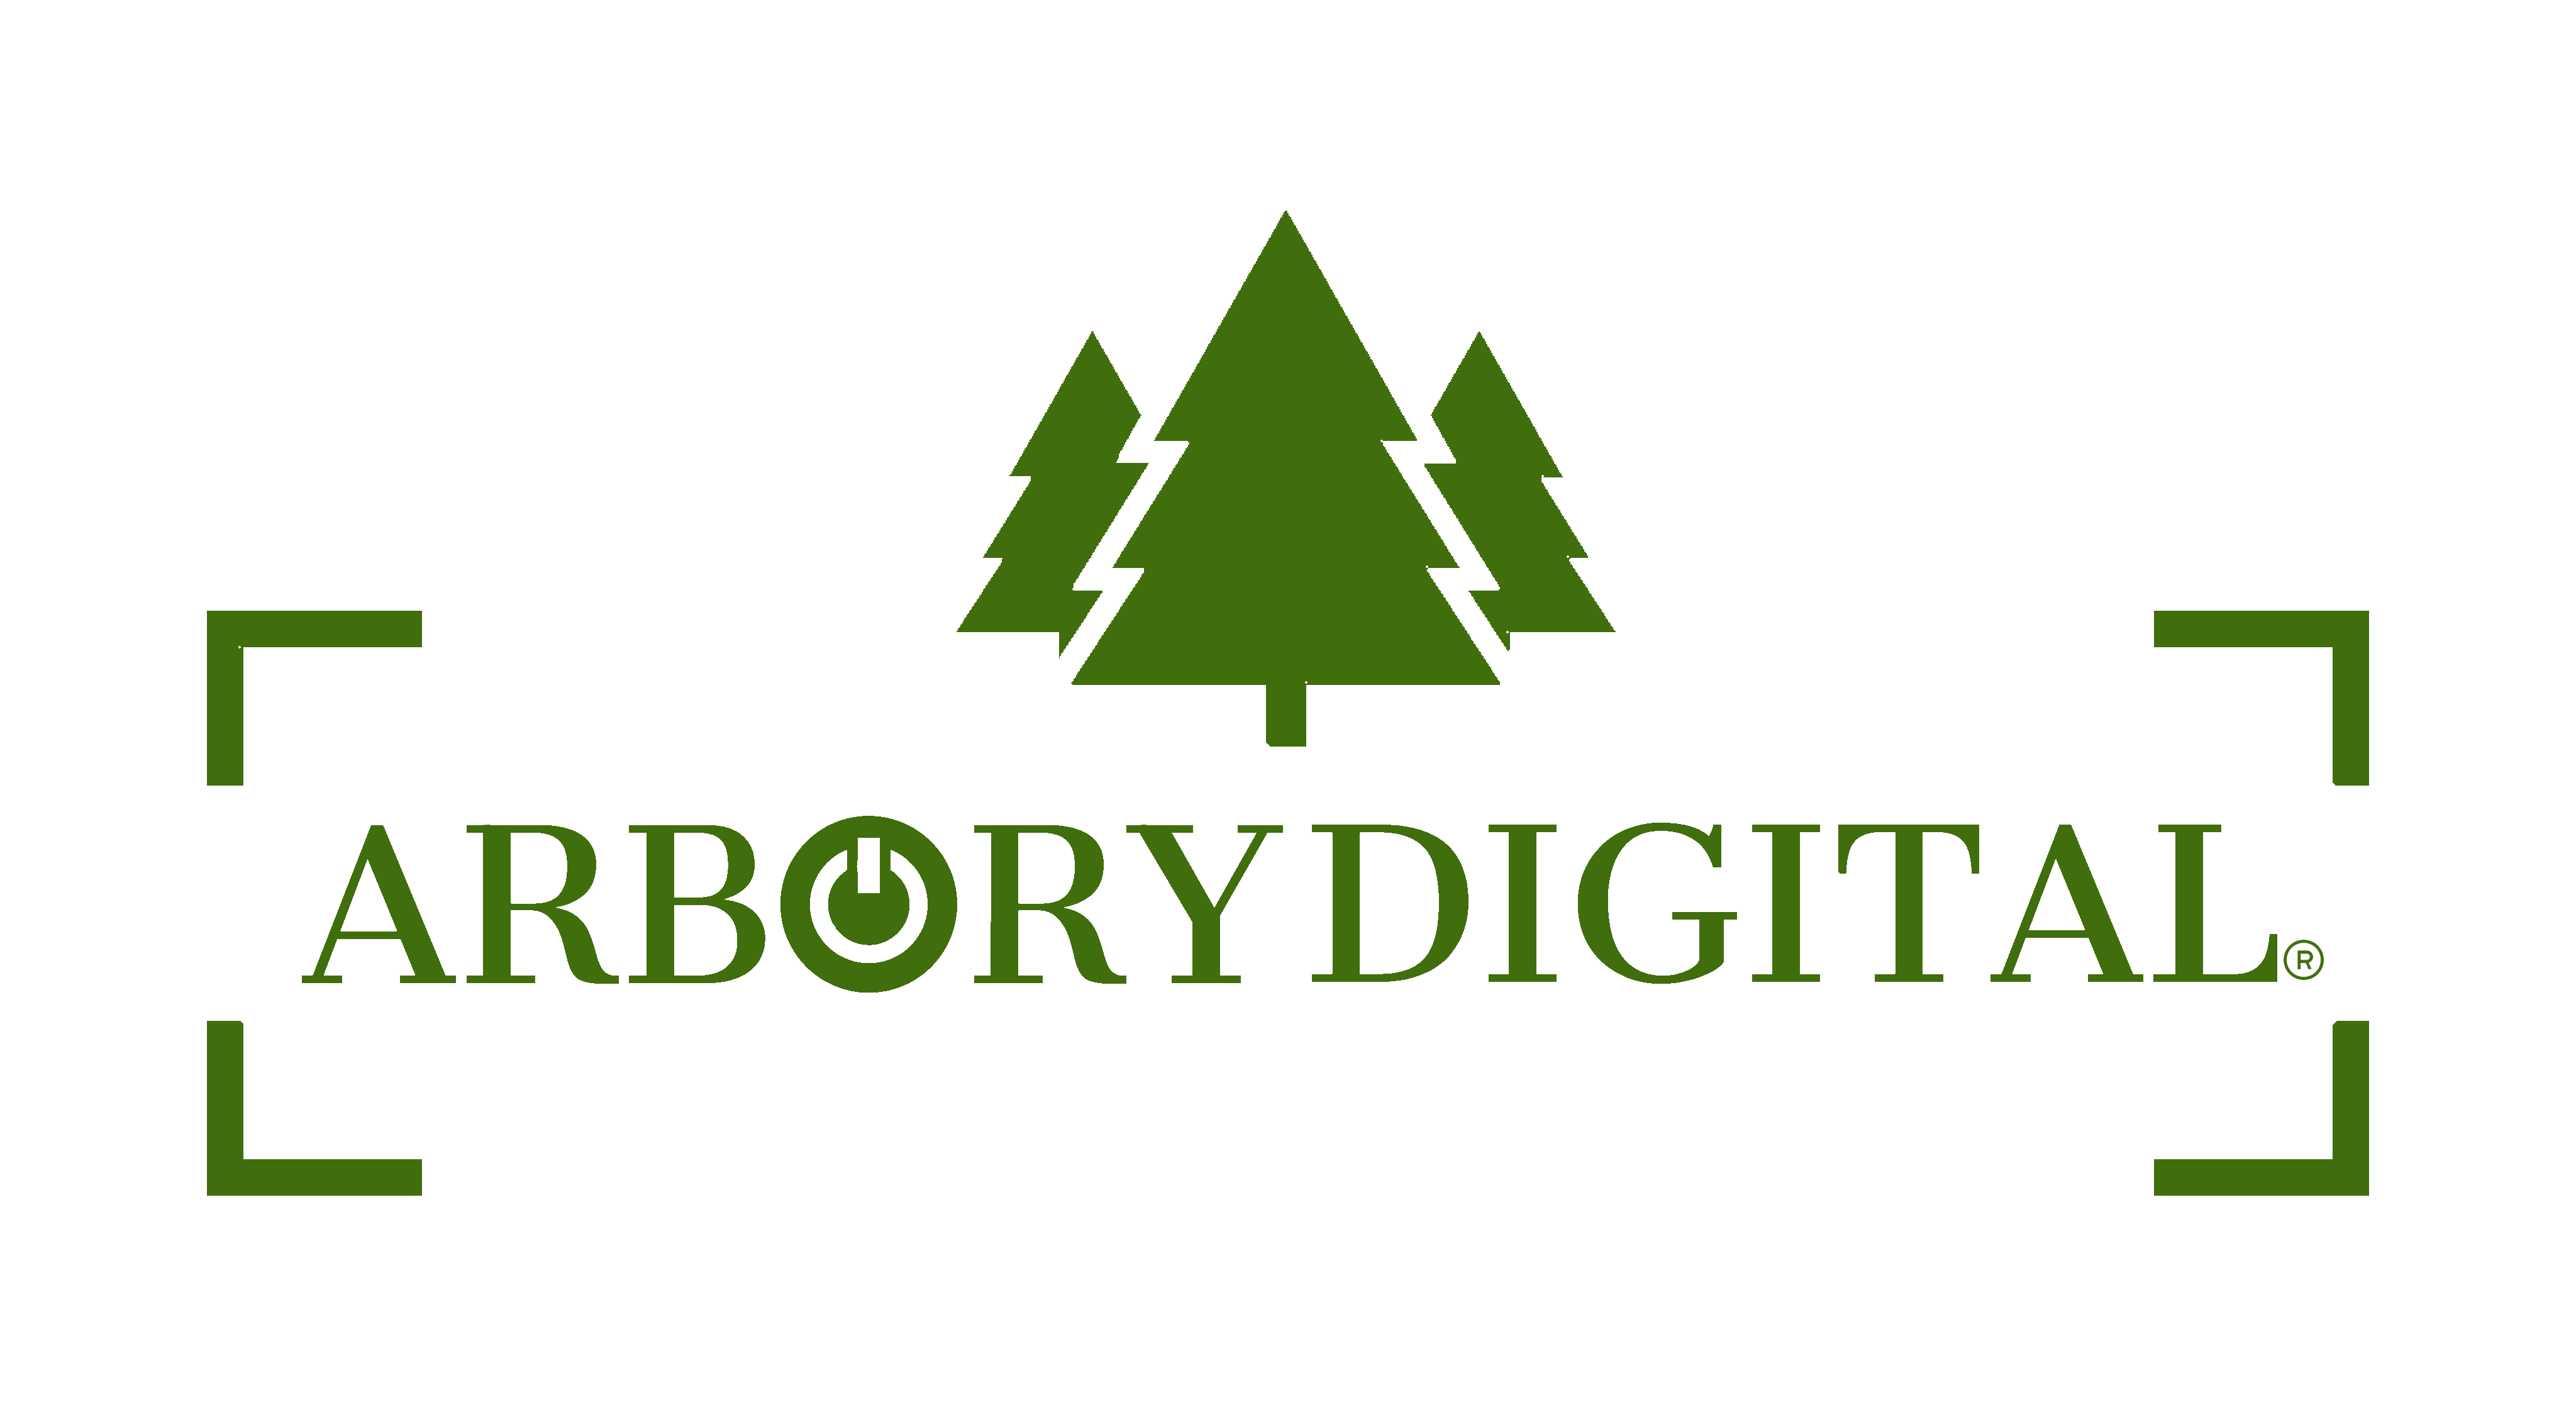 Arbory Digital LLC is now Arbory Digital Group, Inc.